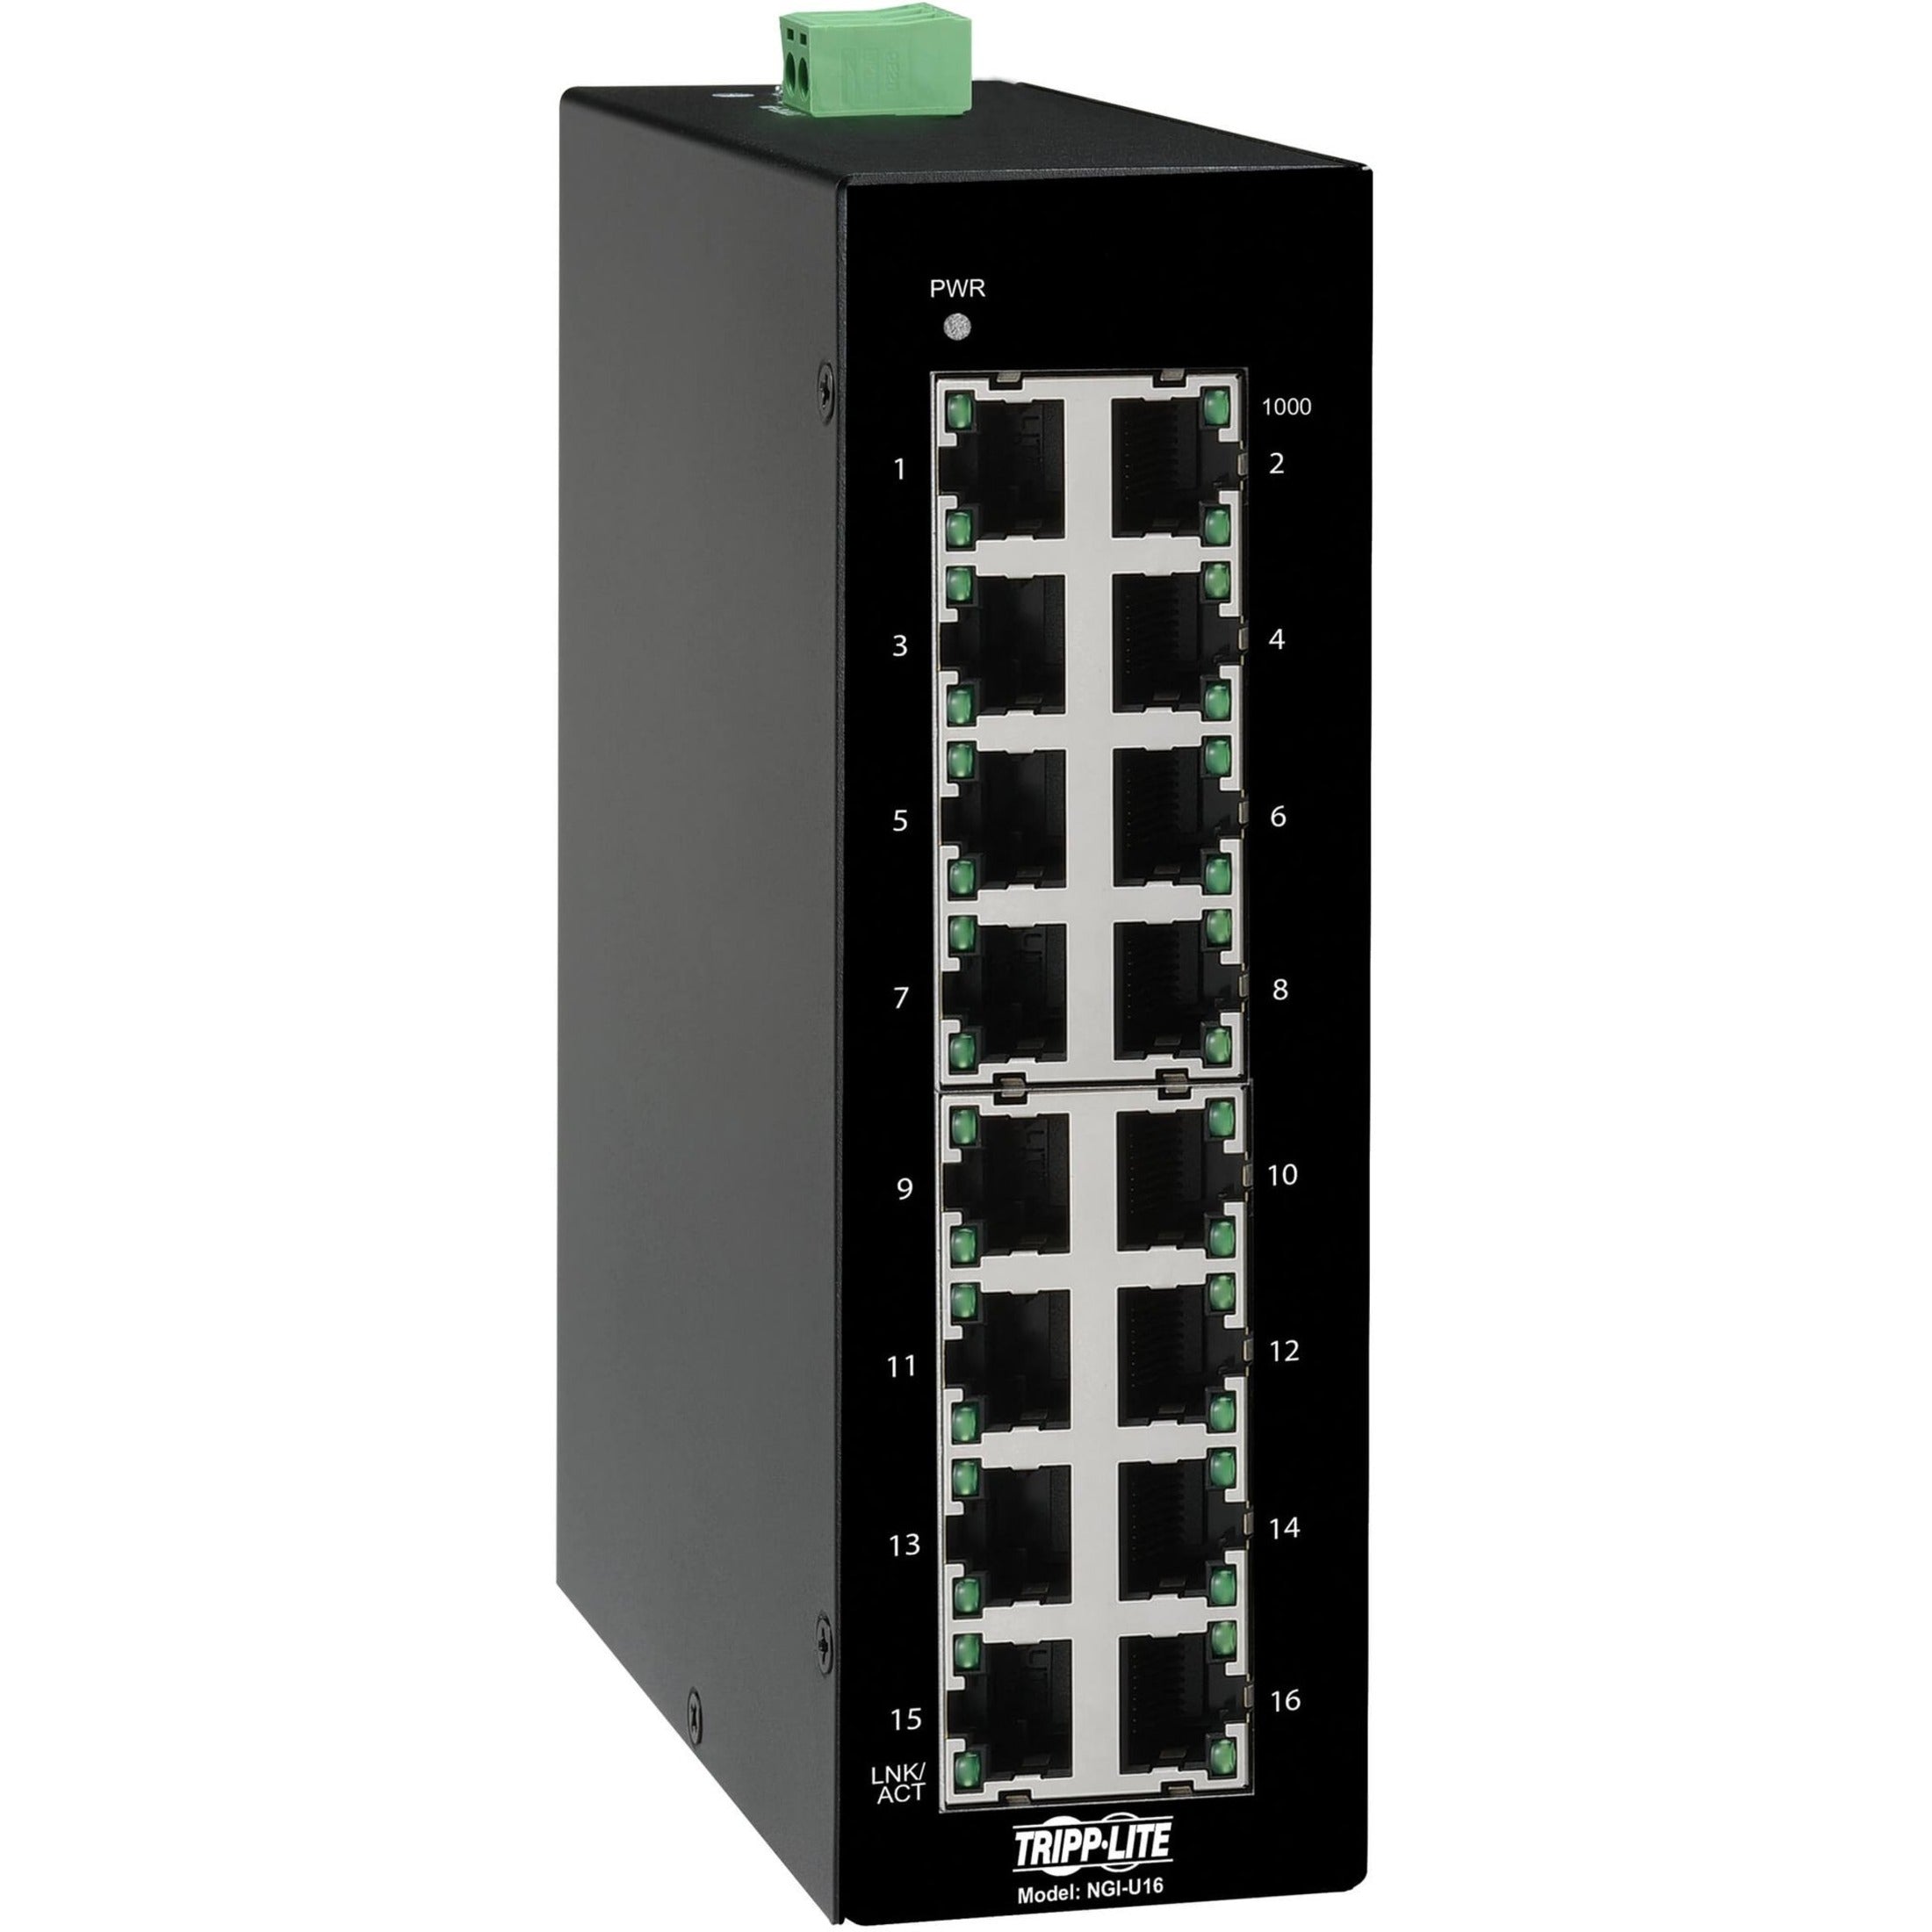 Tripp Lite NGI-U16 Ethernet Switch No administrado 16 puertos Industrial 10/100/1000 Mbps DIN. Marca: Tripp Lite. Traduce Tripp Lite como Tripp Lite.